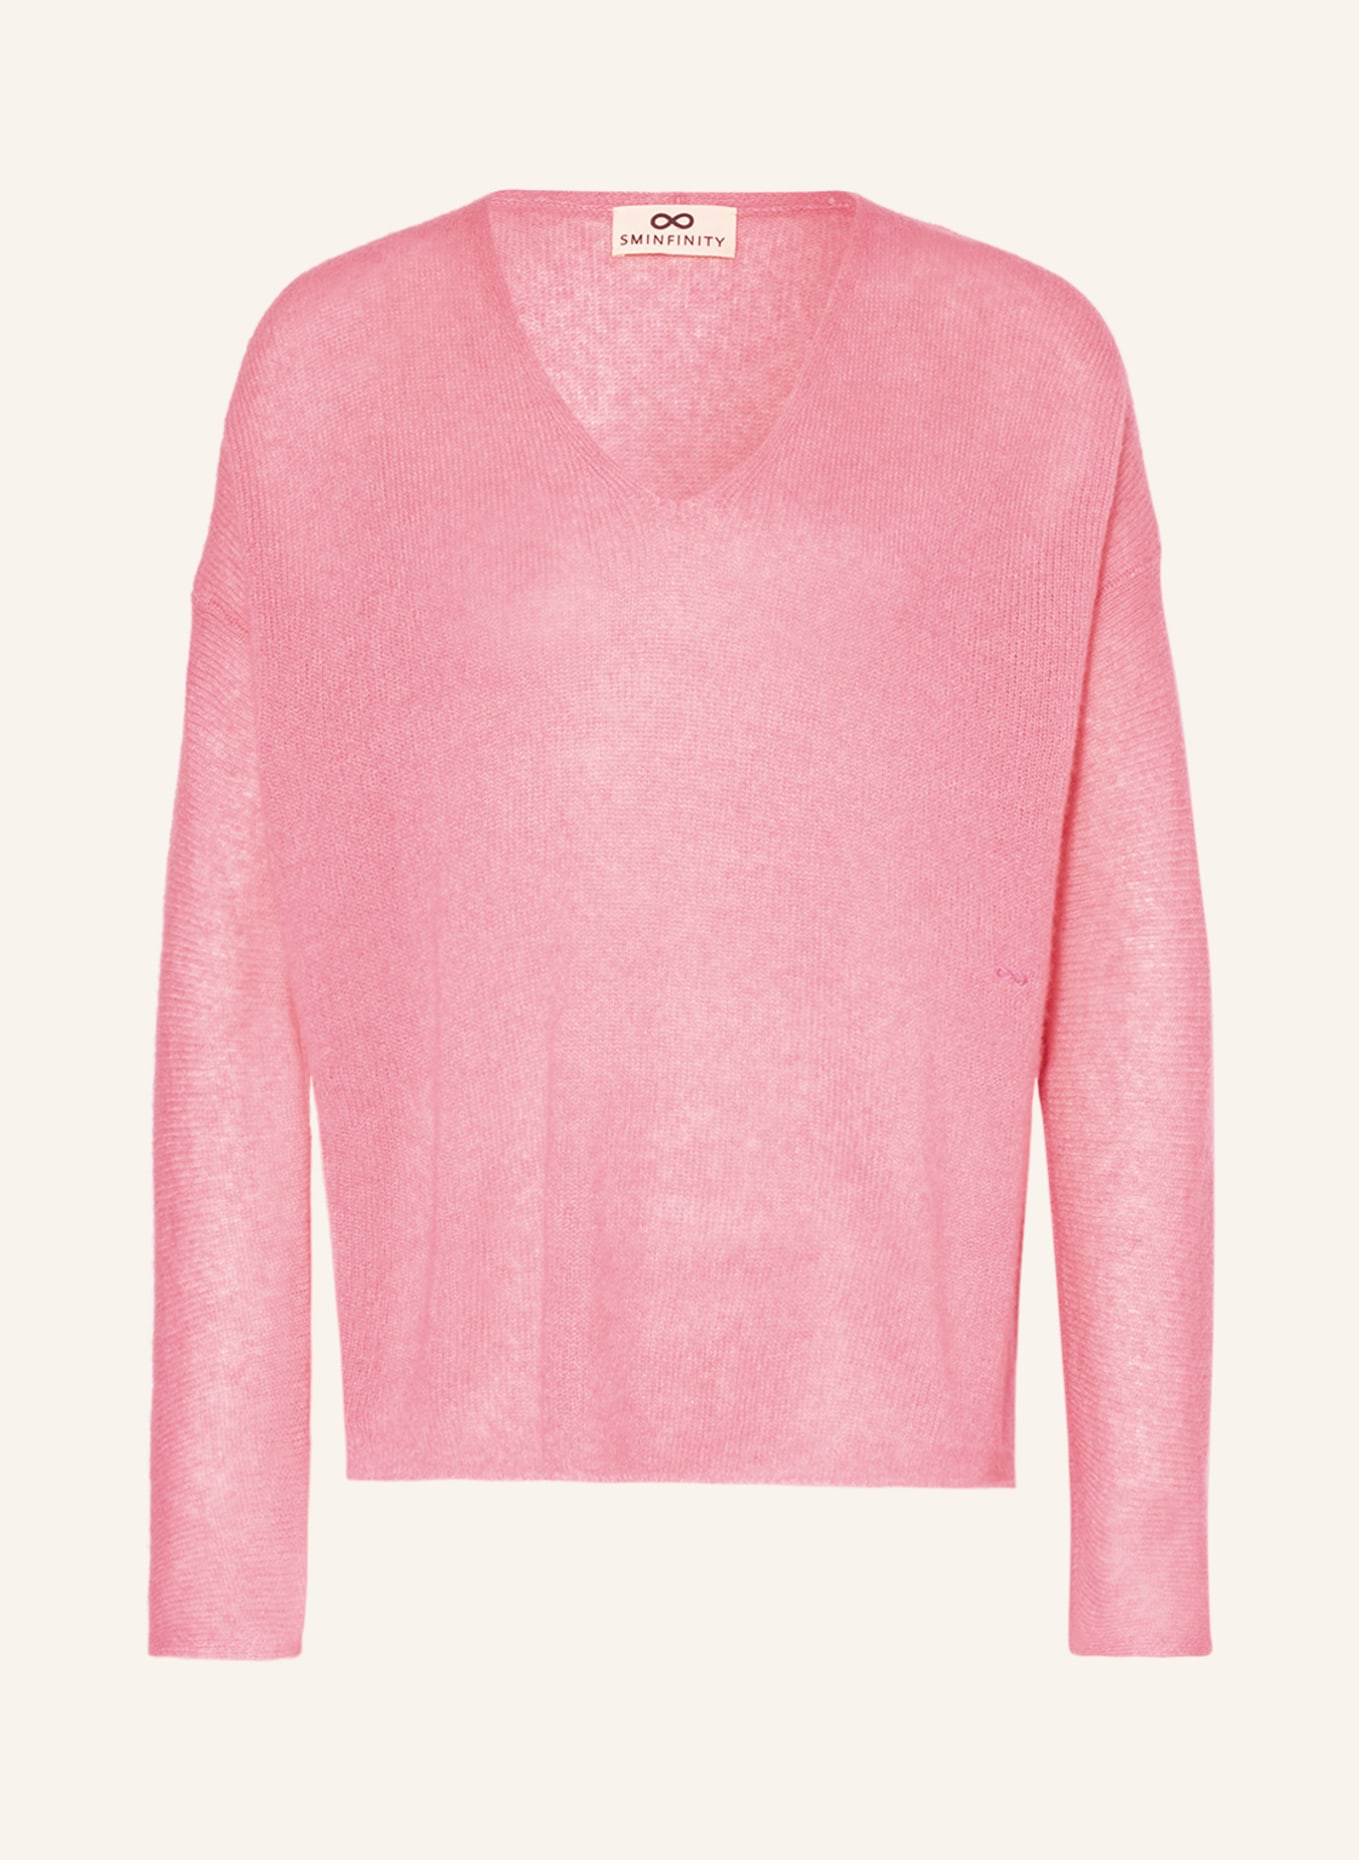 SMINFINITY Cashmere-Pullover, Farbe: PINK (Bild 1)